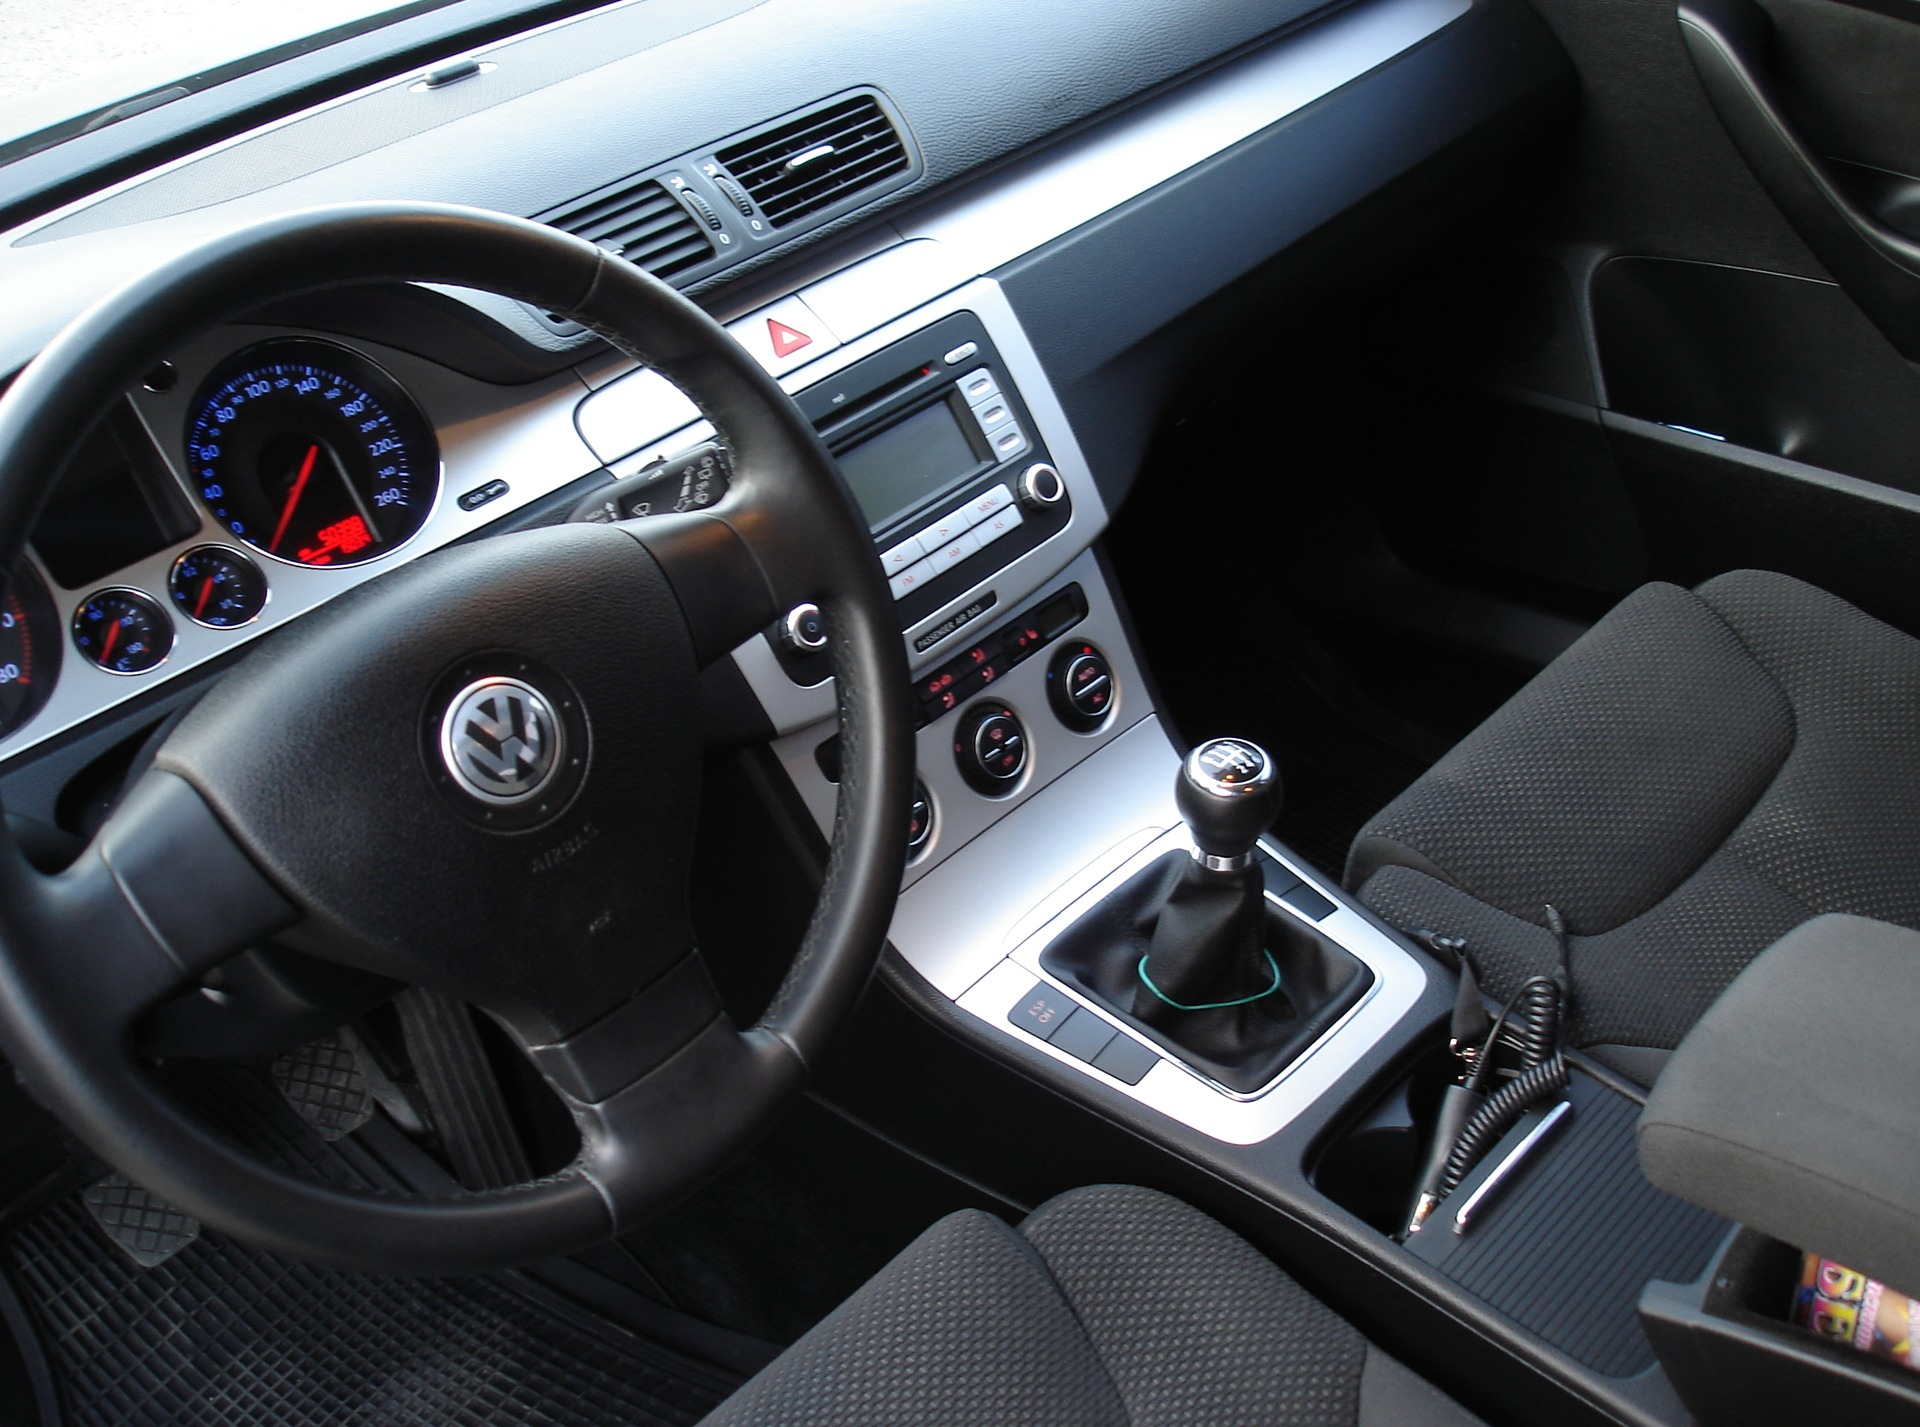 Фольксваген пассат б6 2008. VW Passat b6 Interior. VW Passat b6 салон. Фольксваген Пассат б6 2008 салон. WV Passat b6 салон.